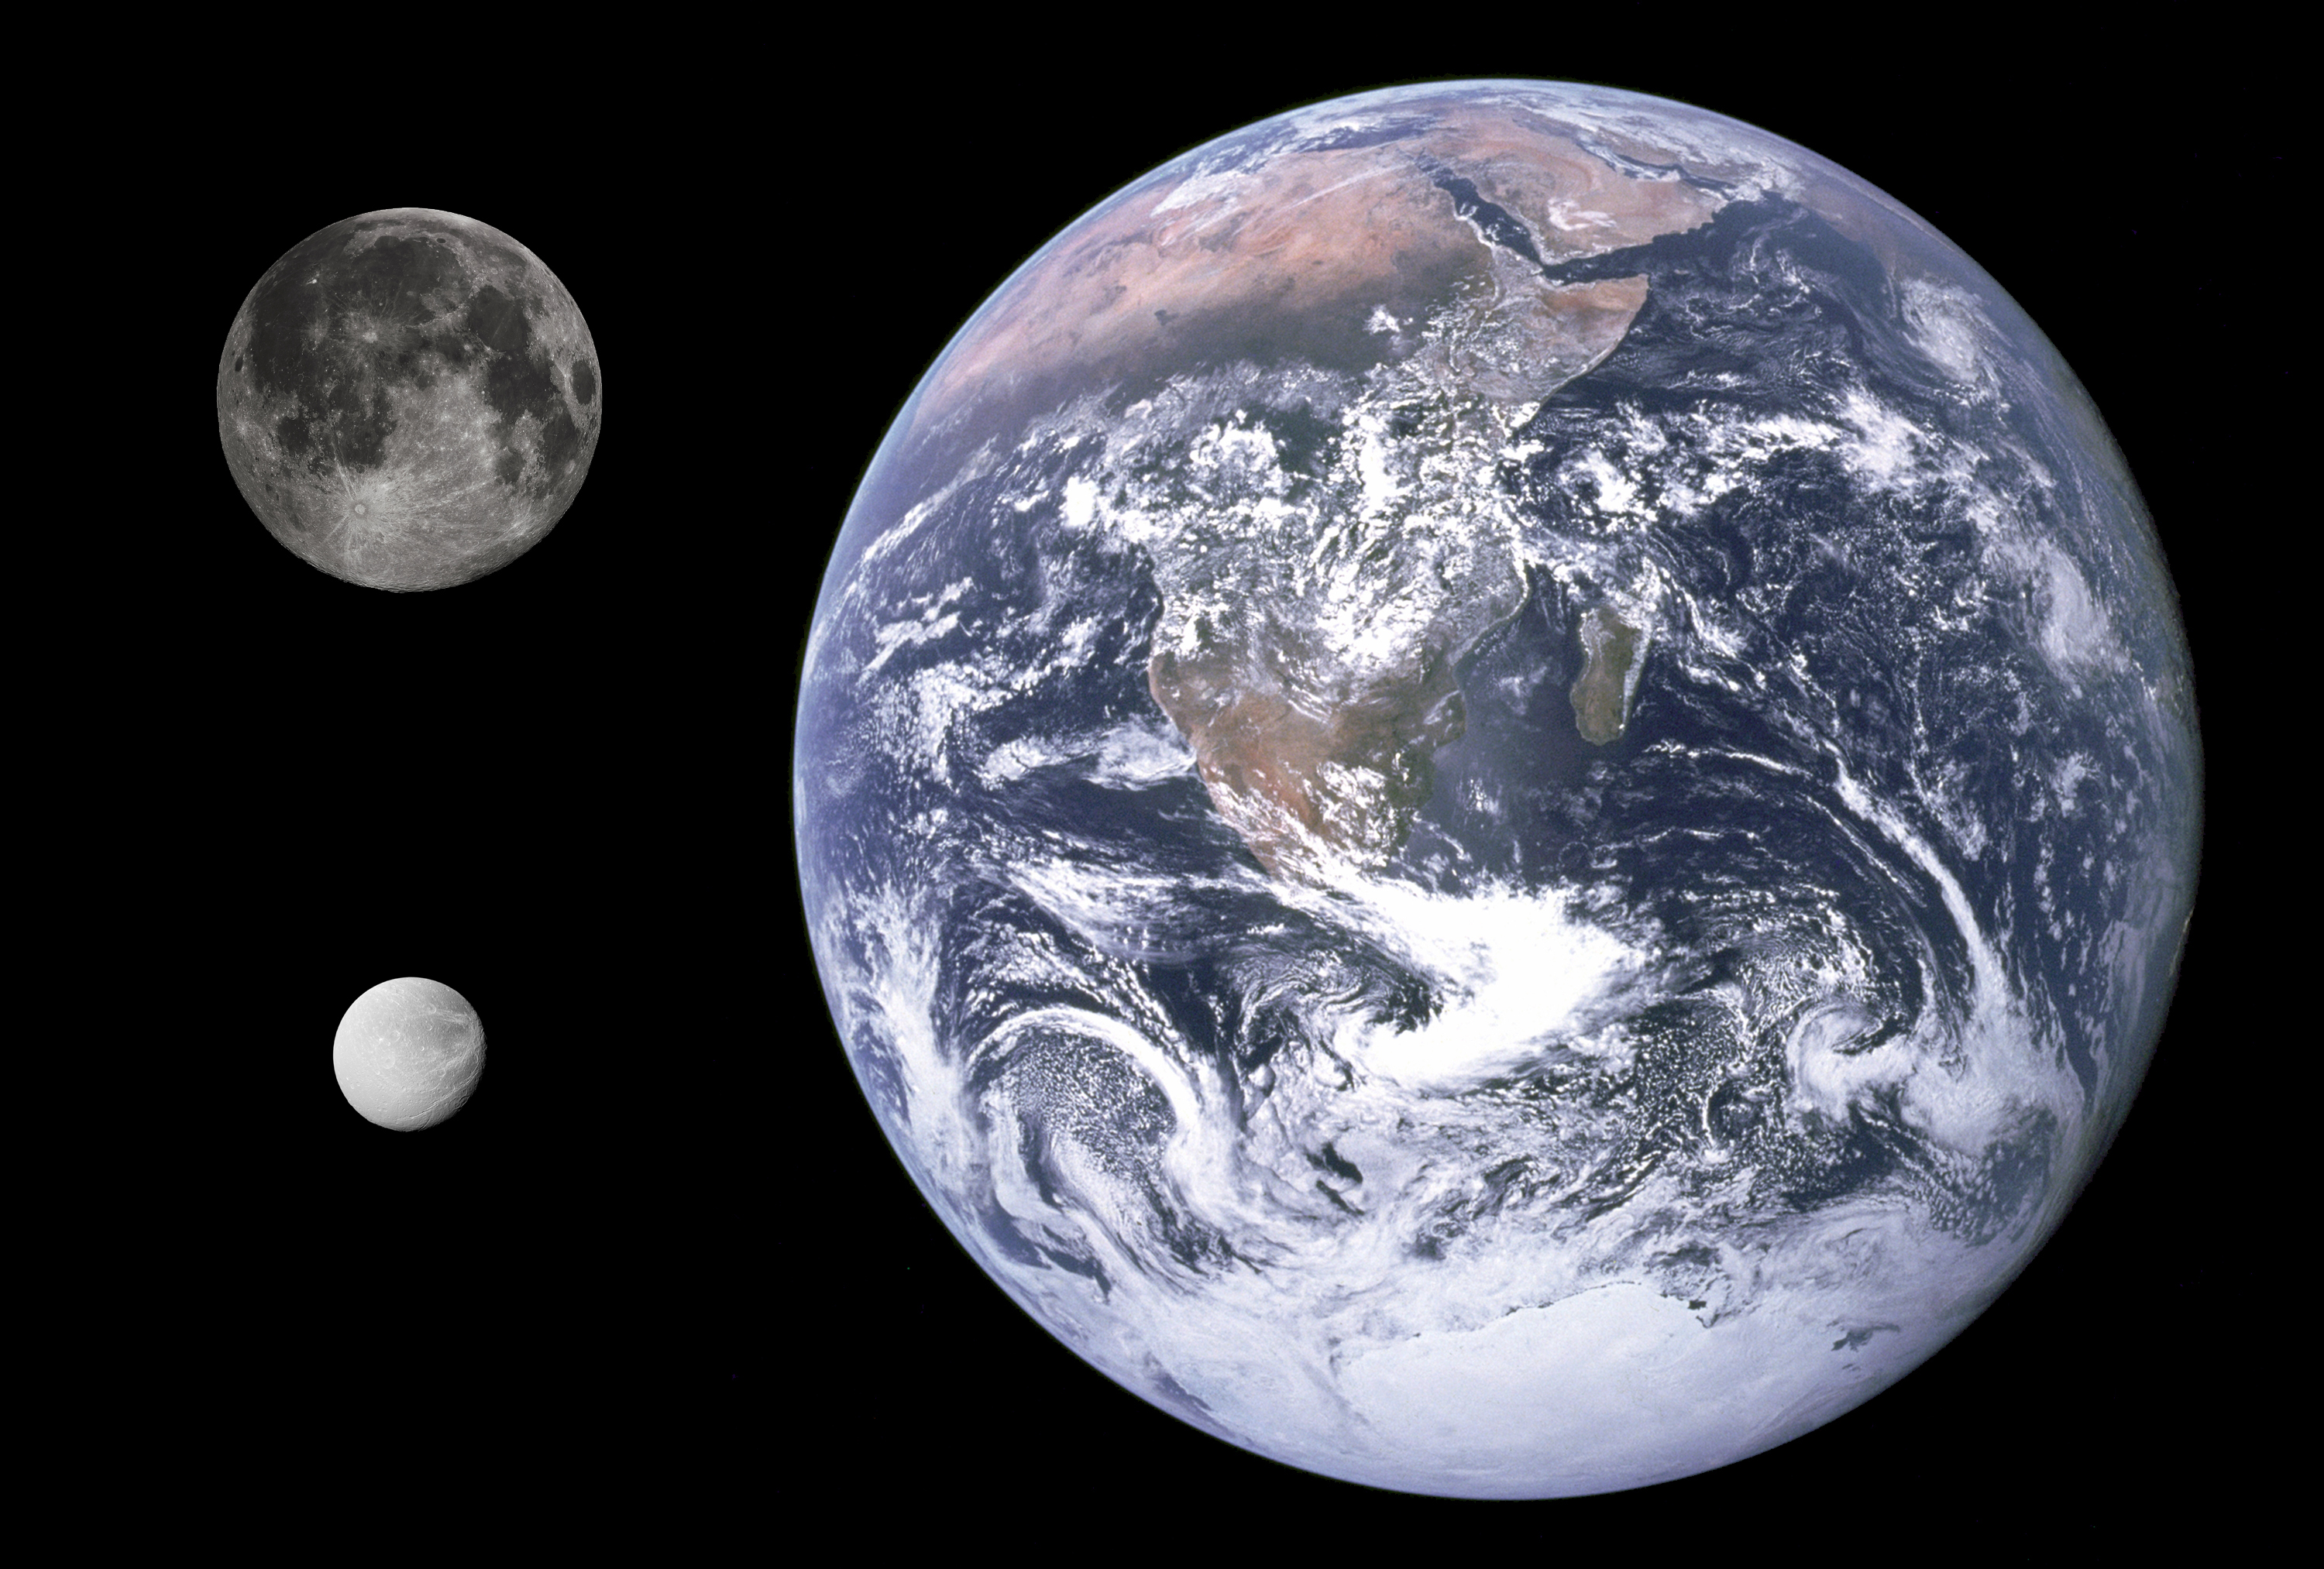 dione_earth_moon_size_comparison.jpg